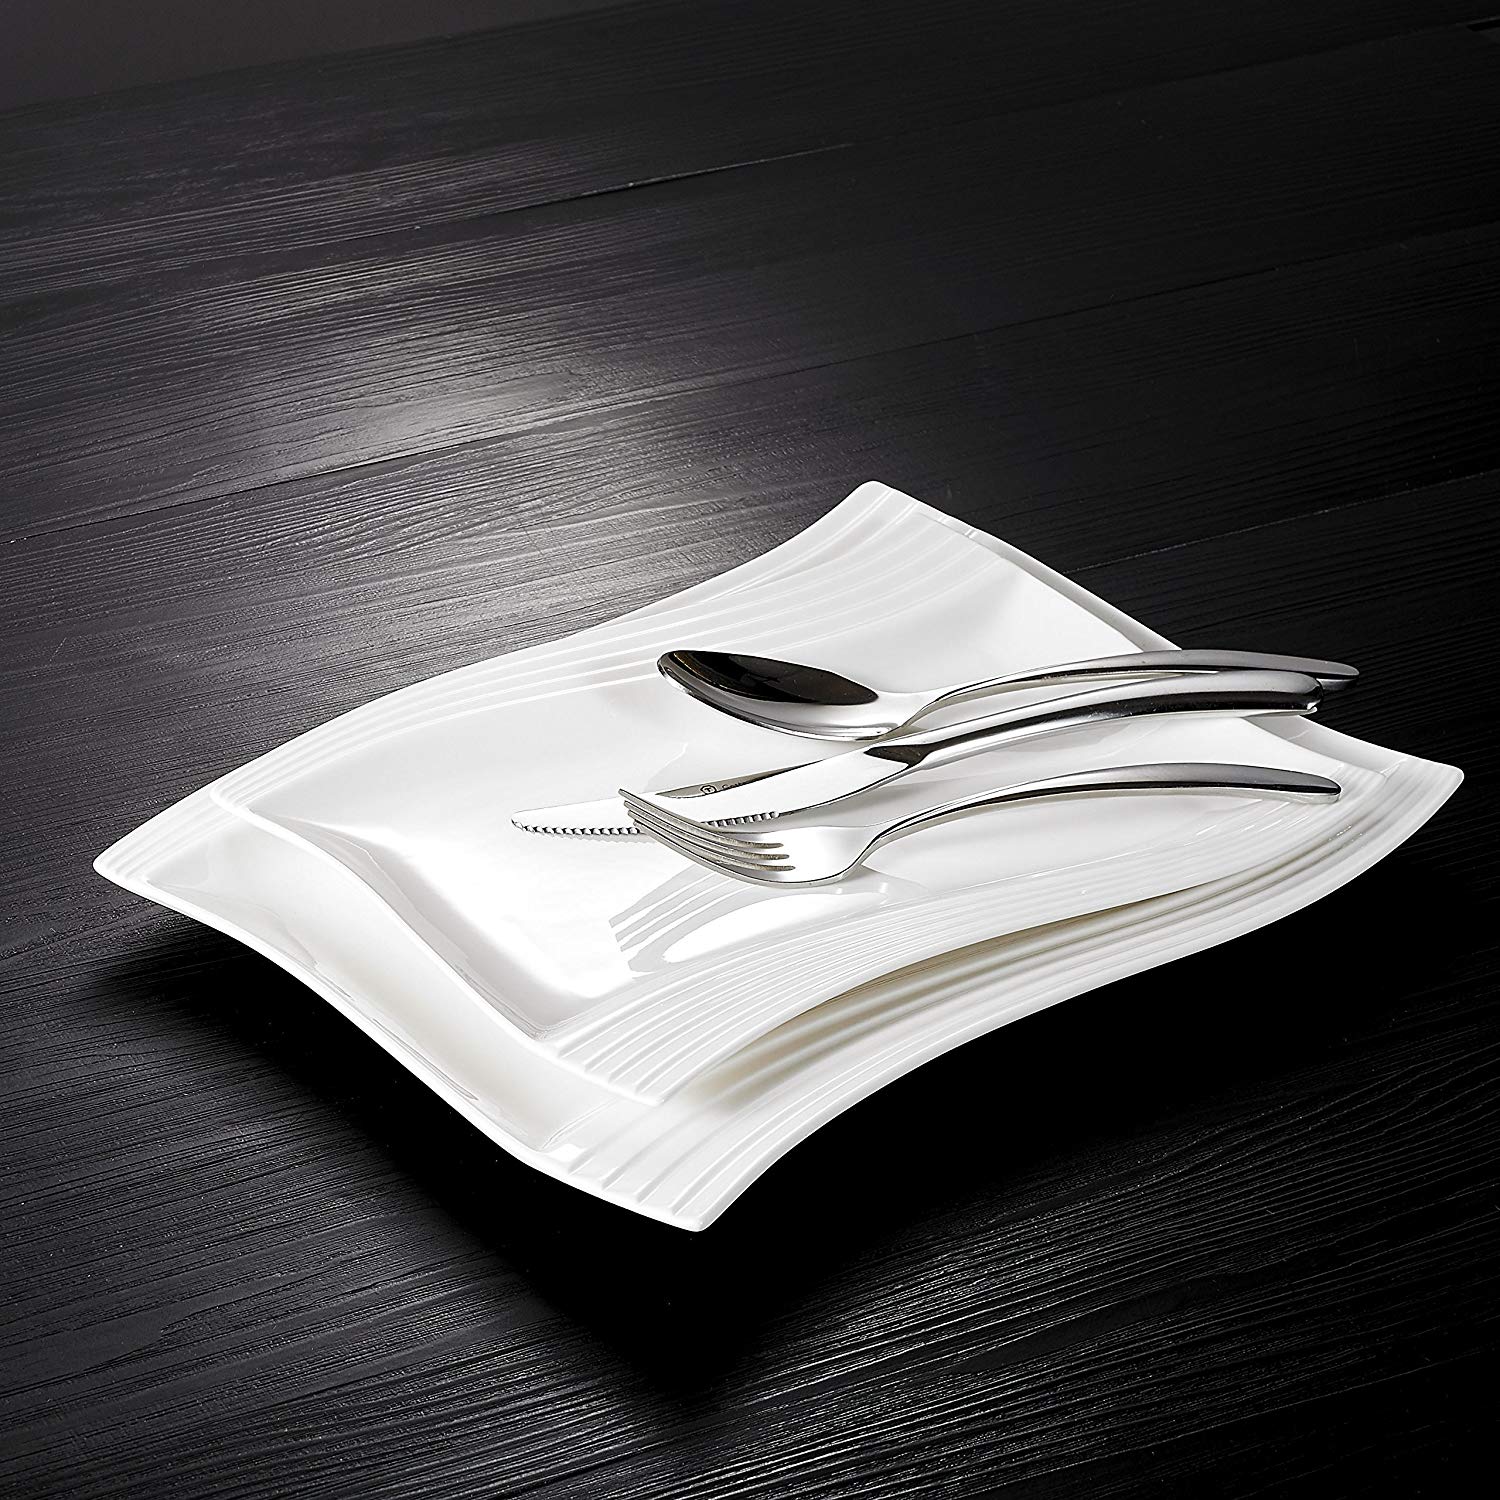 Amparo 4-Piece Ivory White Porcelain Dinner Plate Set (11"&13.25") - Nordic Side - 111325, Amparo, Ceramic, Dessert, Dinner, Dishes, Ivory, MALACASA, Piece, Plate, Porcelain, Rectangular, Sal